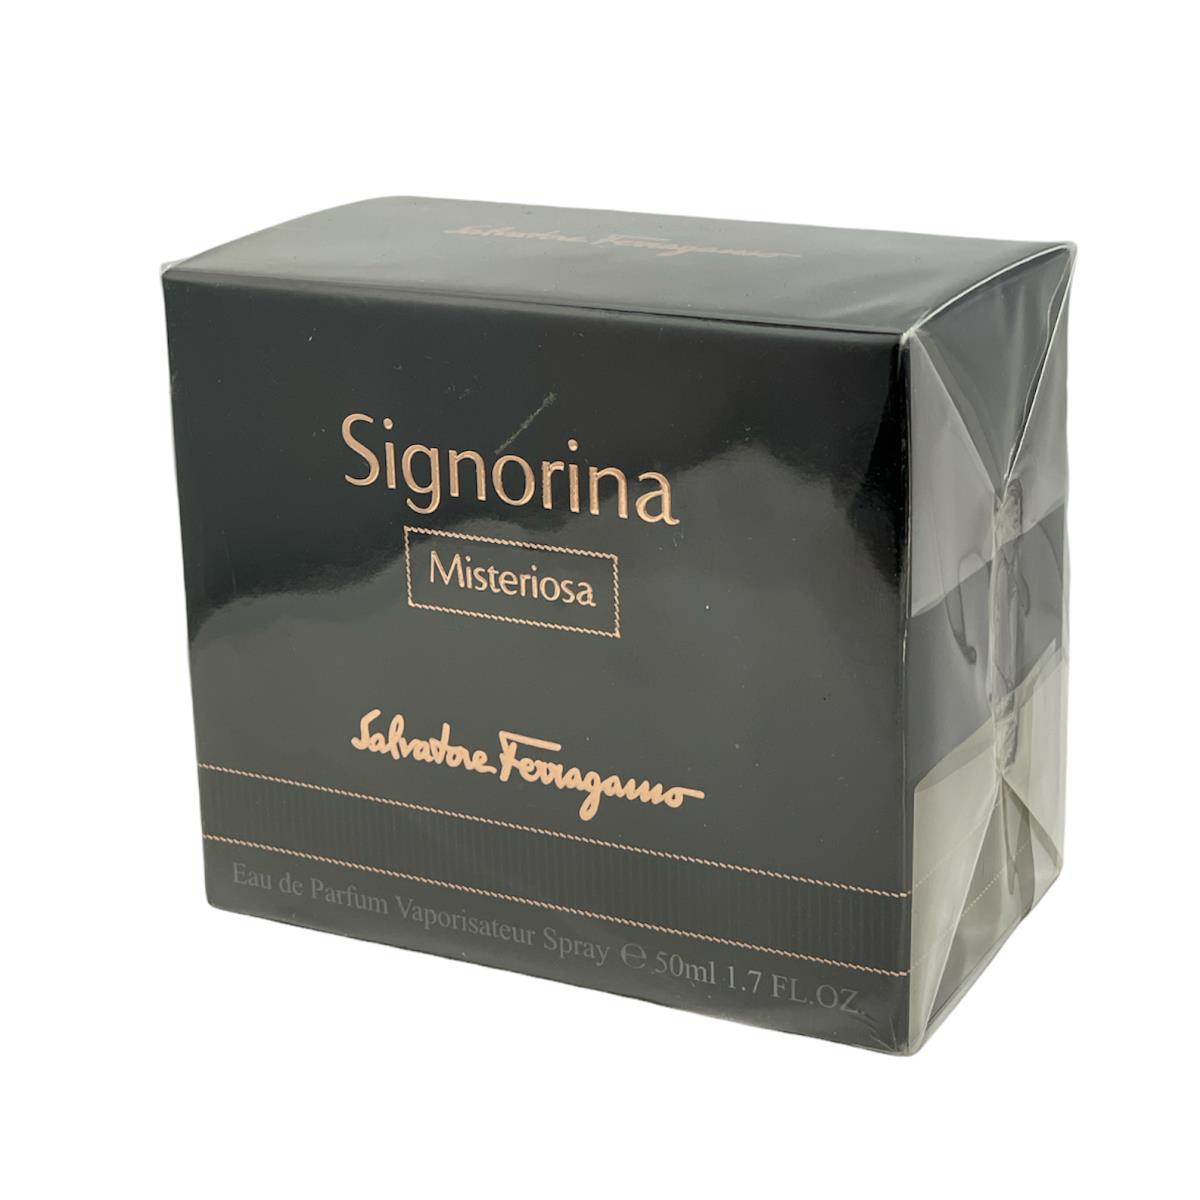 Signorina Misteriosa By Salvatore Ferragamo Eau De Parfum Spray 50ml/1.7fl.oz